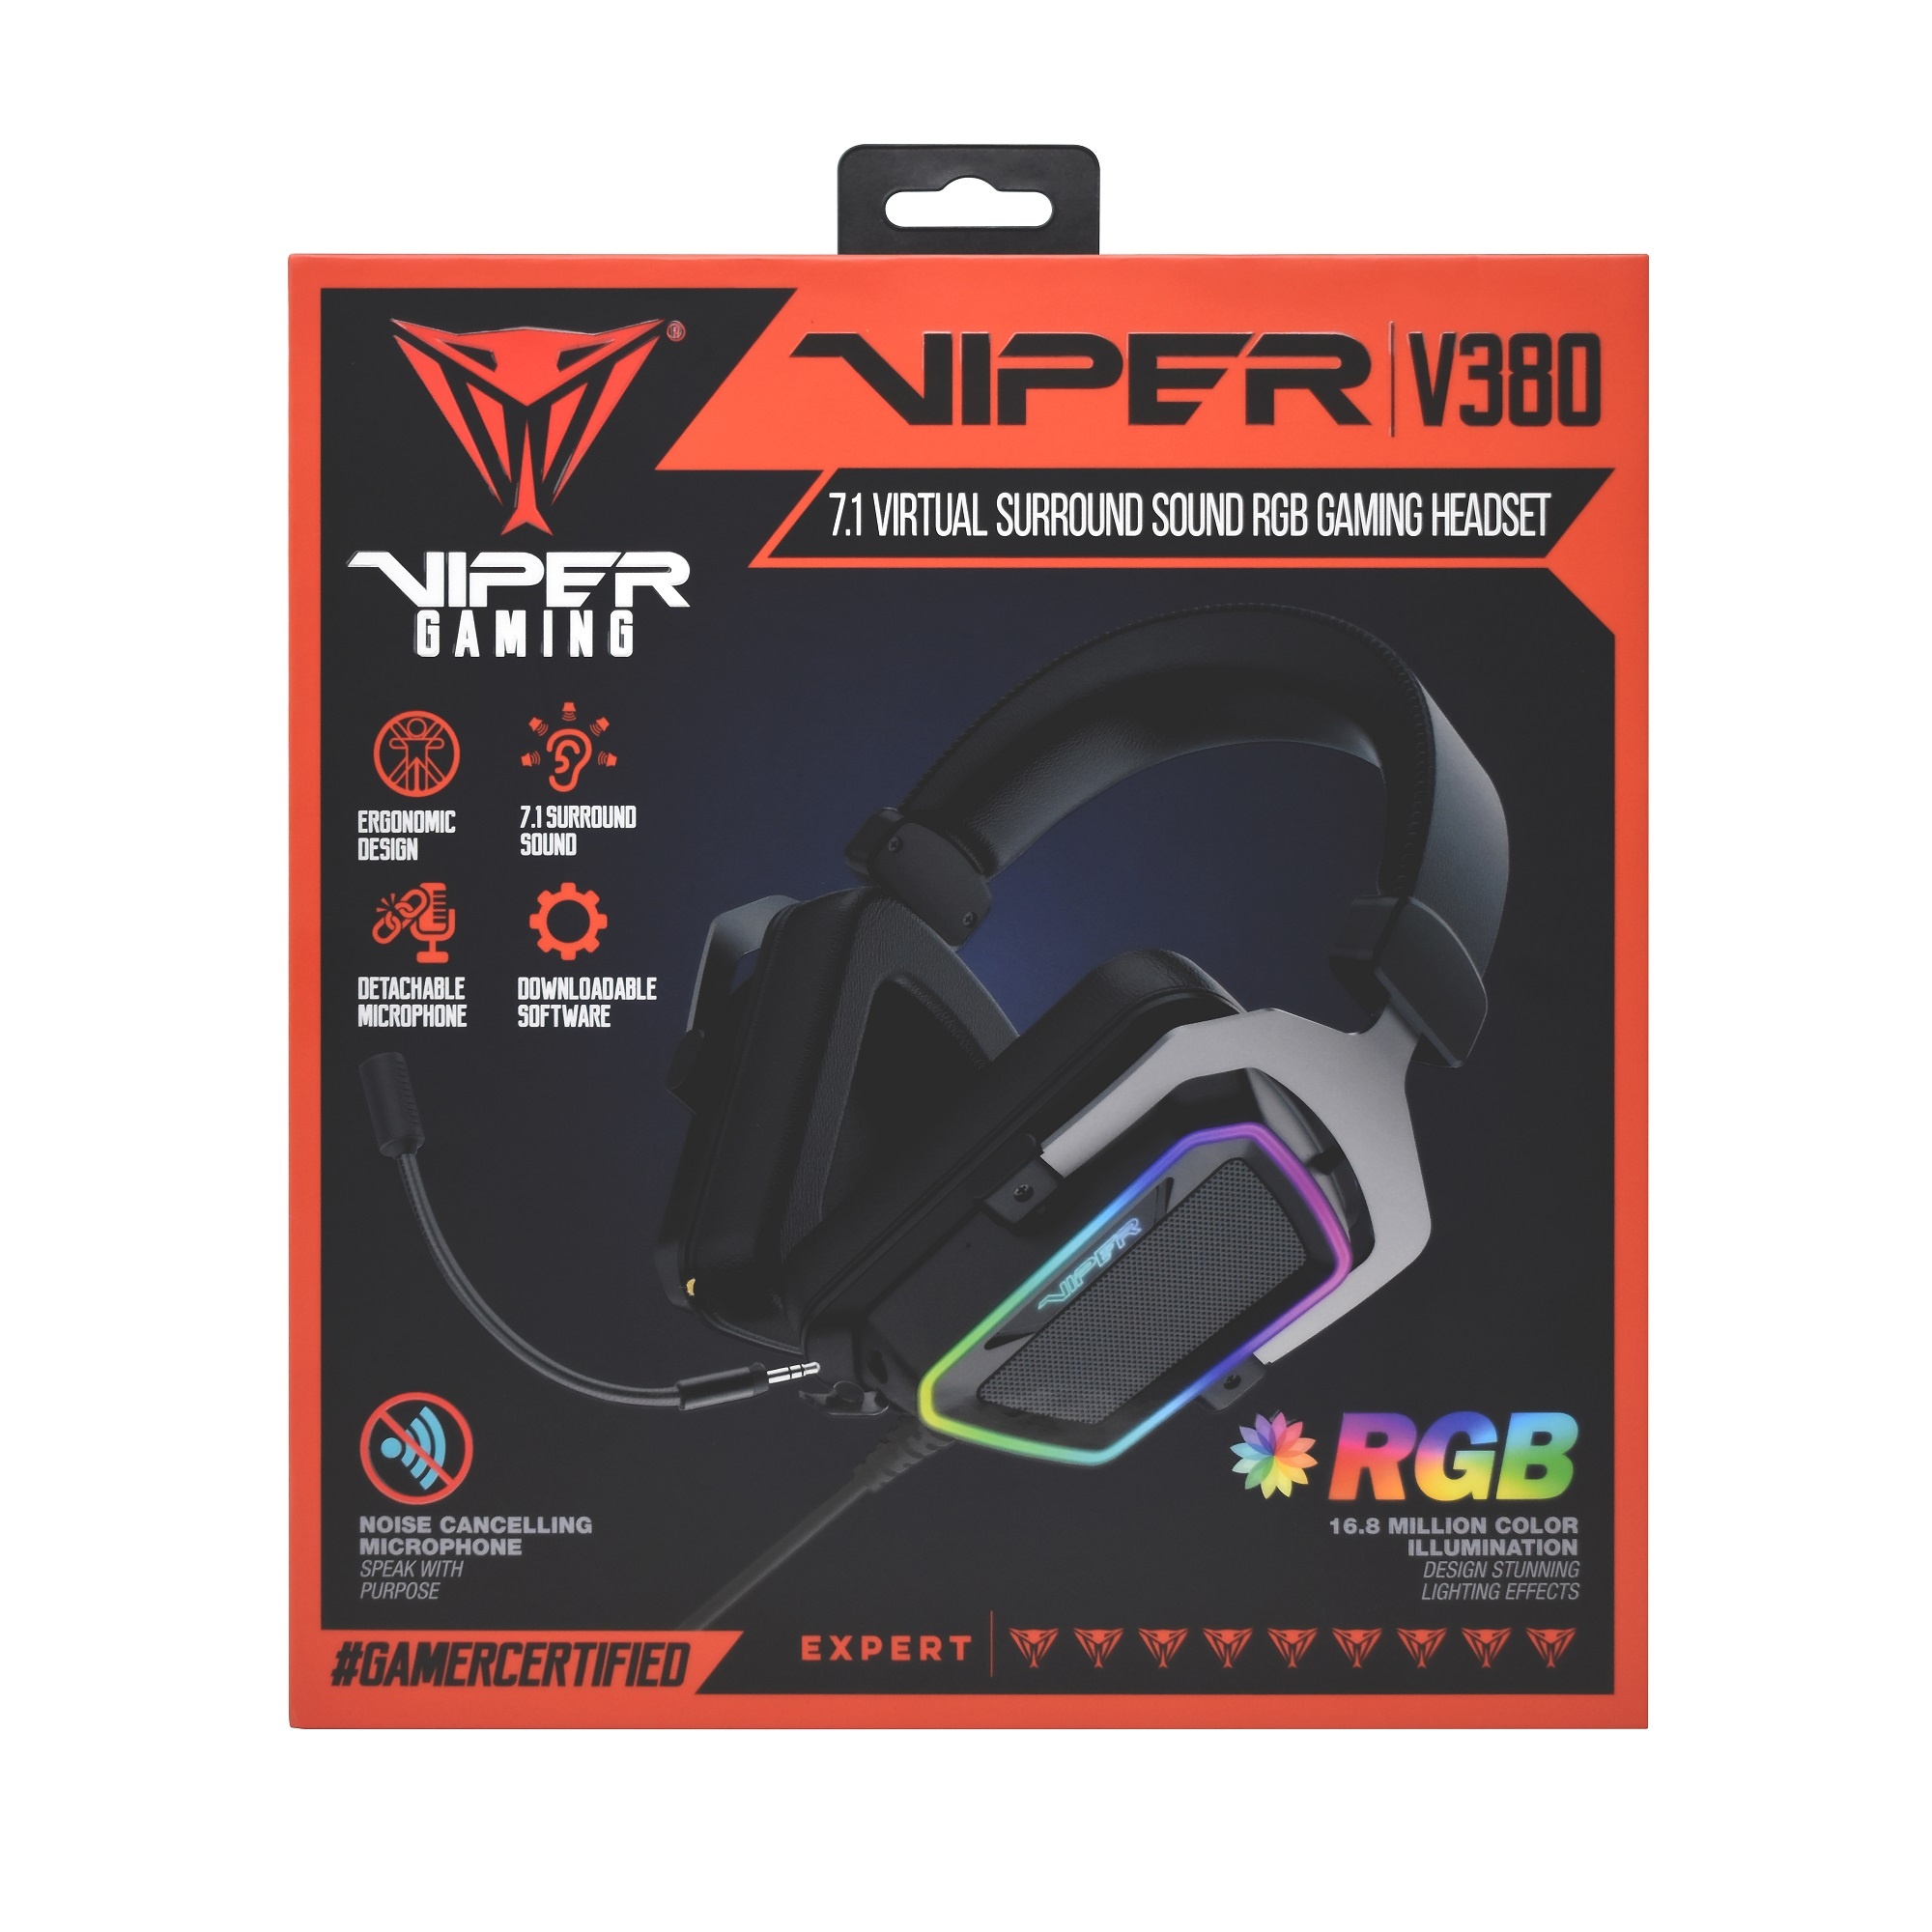 VIPER GAMING by PATRIOT™ launches Viper V380 Virtual 7.1 Surround Sound RGB Gaming Headset